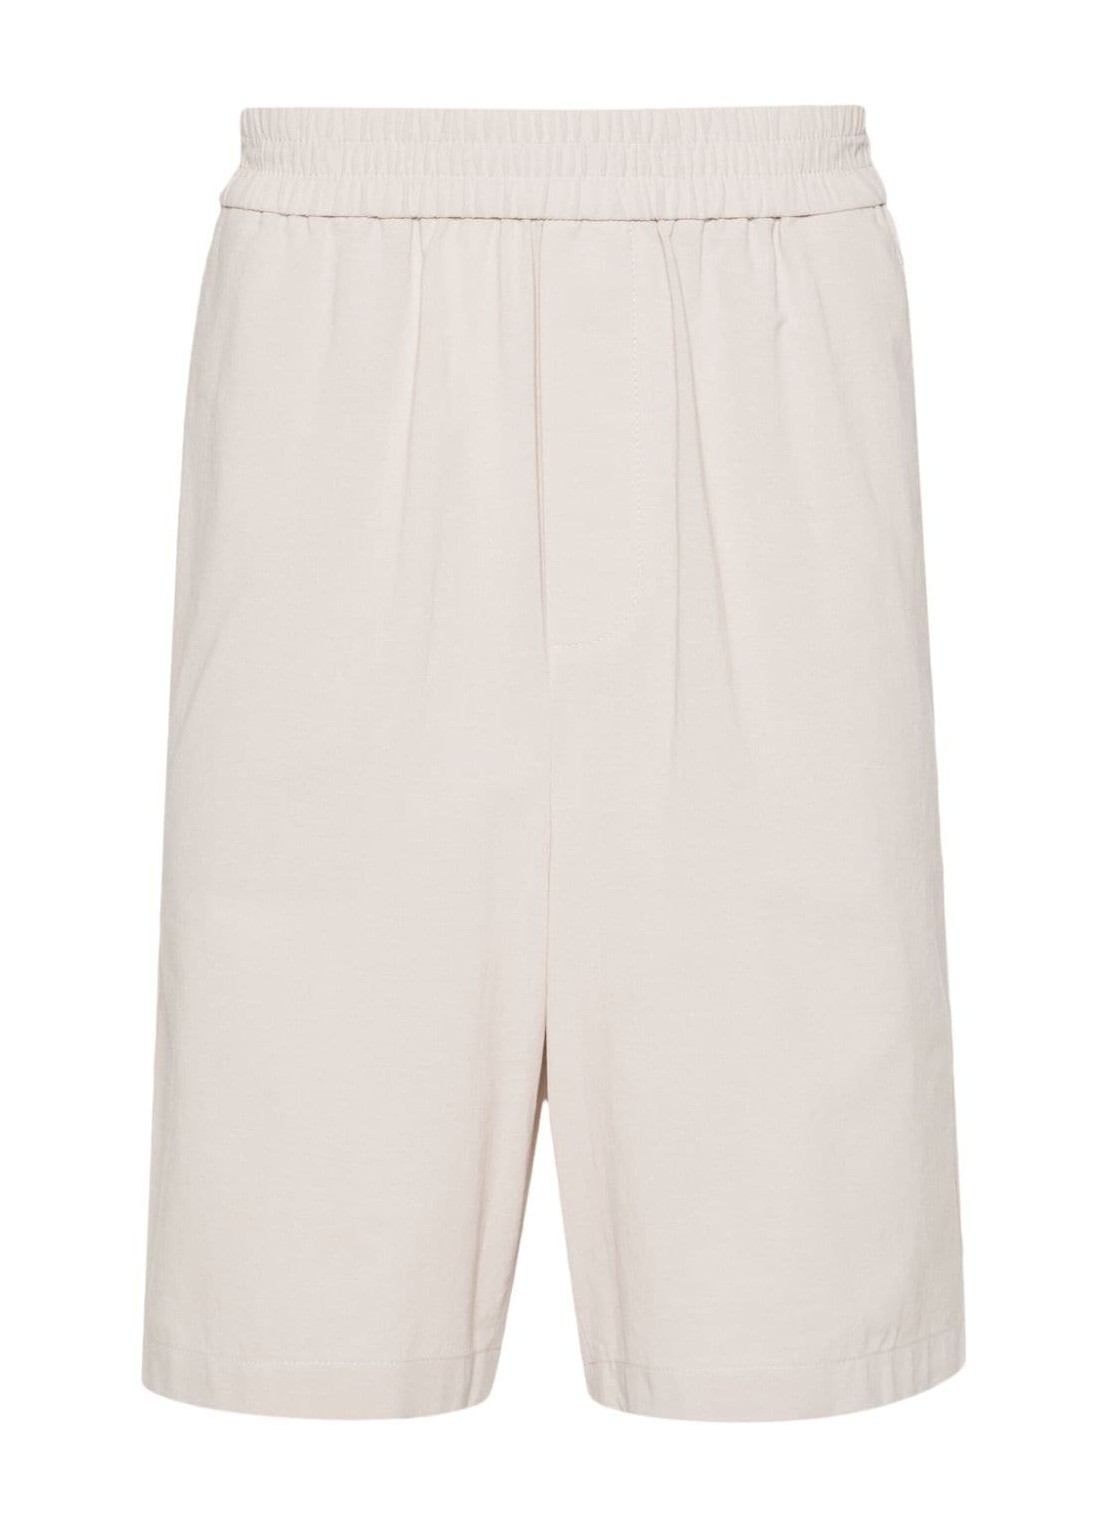 Pantalon corto ami short pant manelasticated waist bermuda - hso306co0062 271 talla S
 